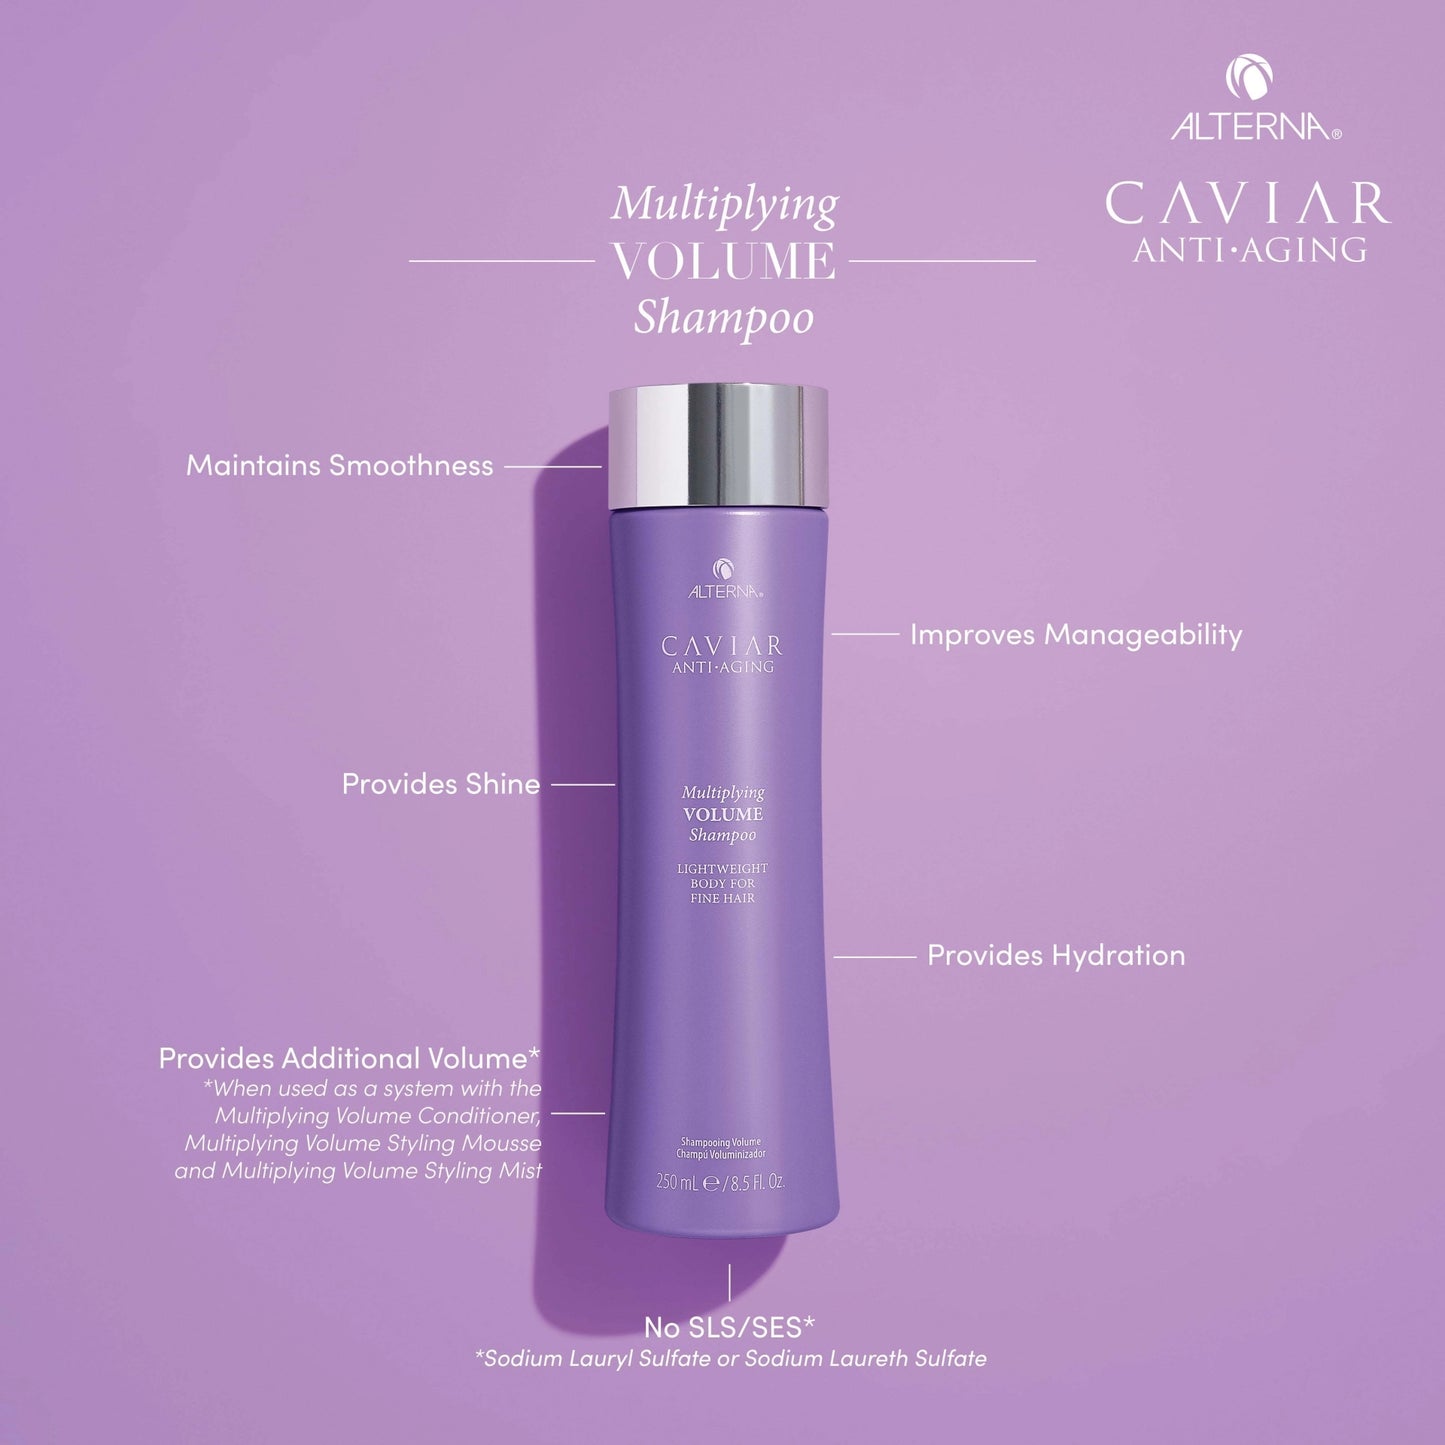 CAVIAR Anti-Aging Multiplying Volume Shampoo